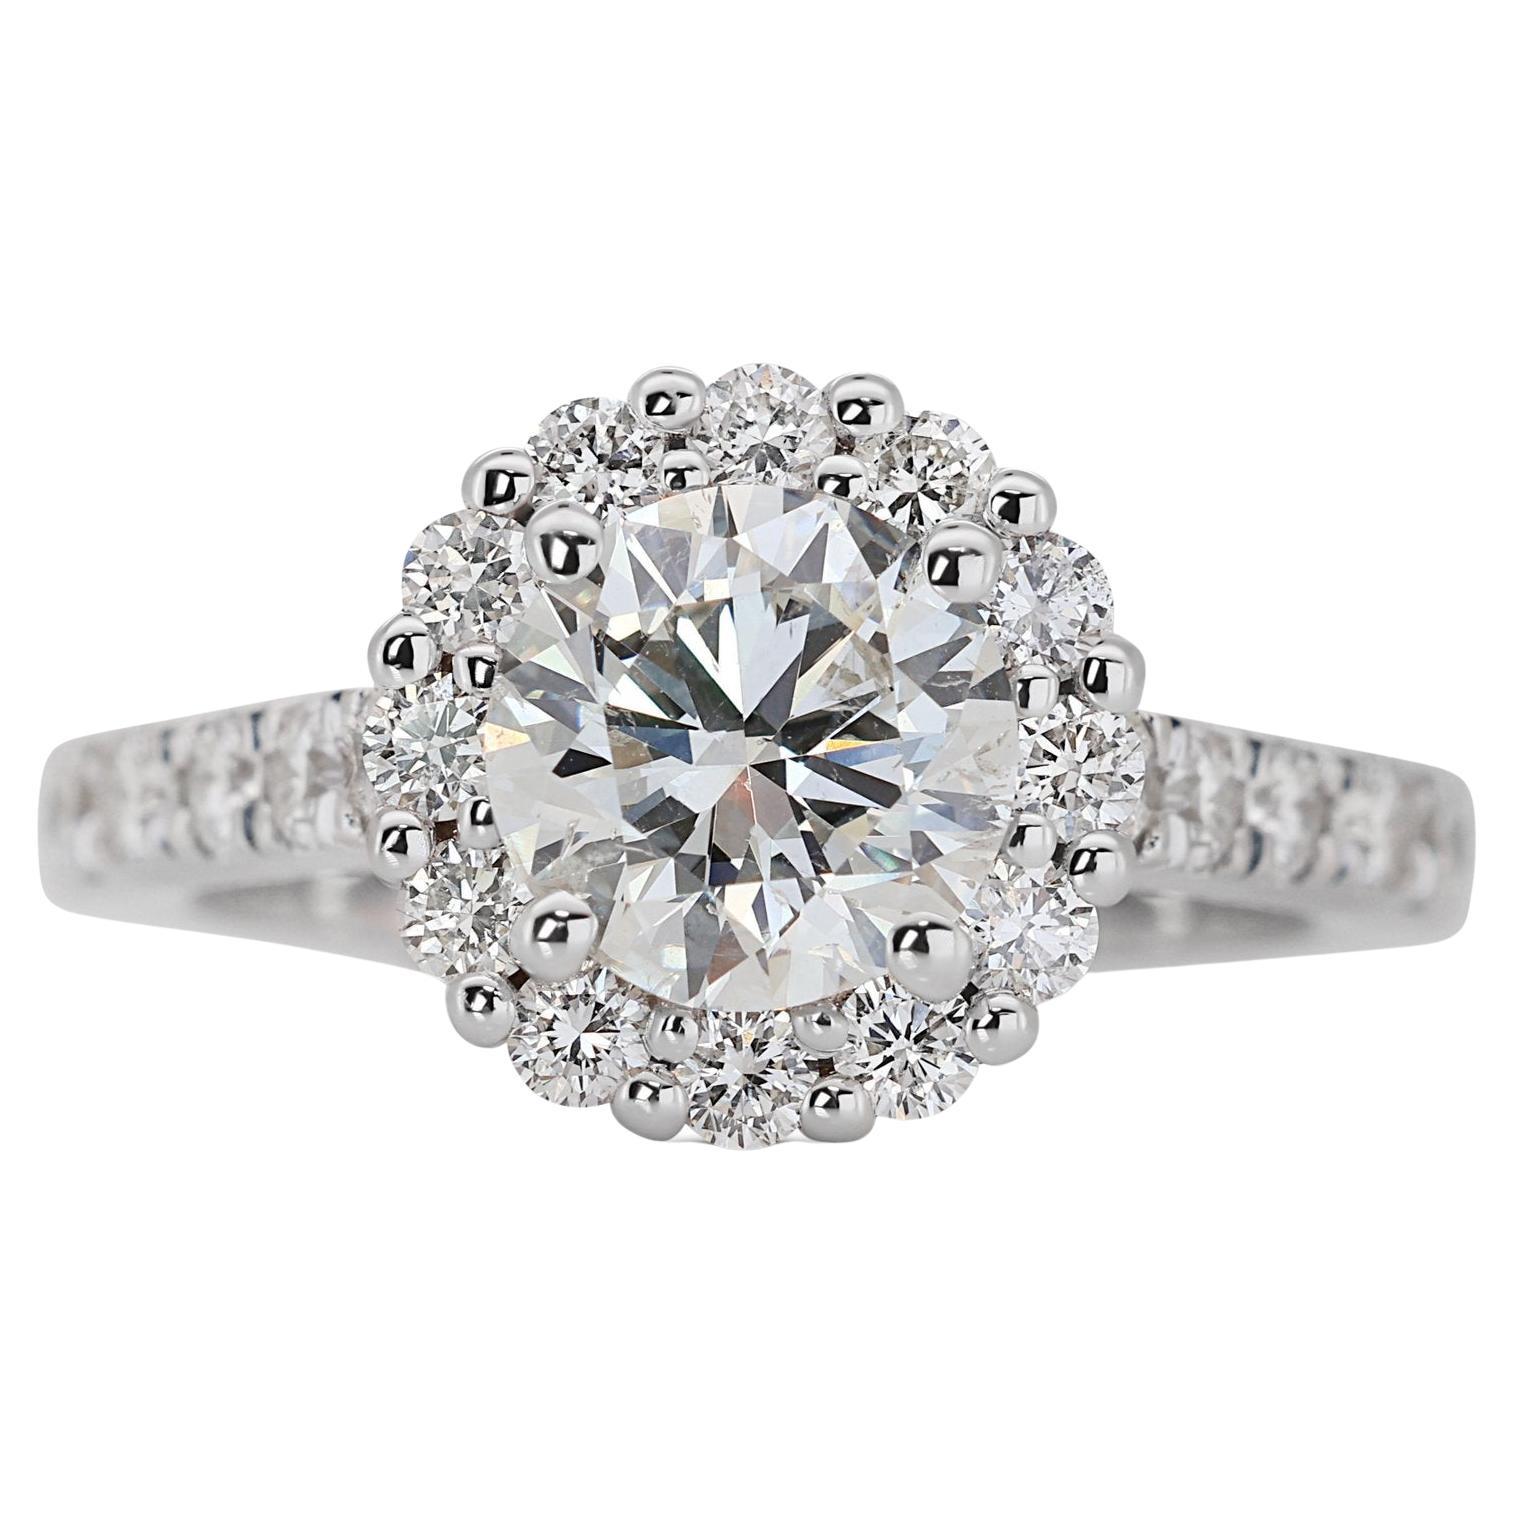 Luxurious 1.72ct Diamond Halo Ring in 18k White Gold - GIA Certified